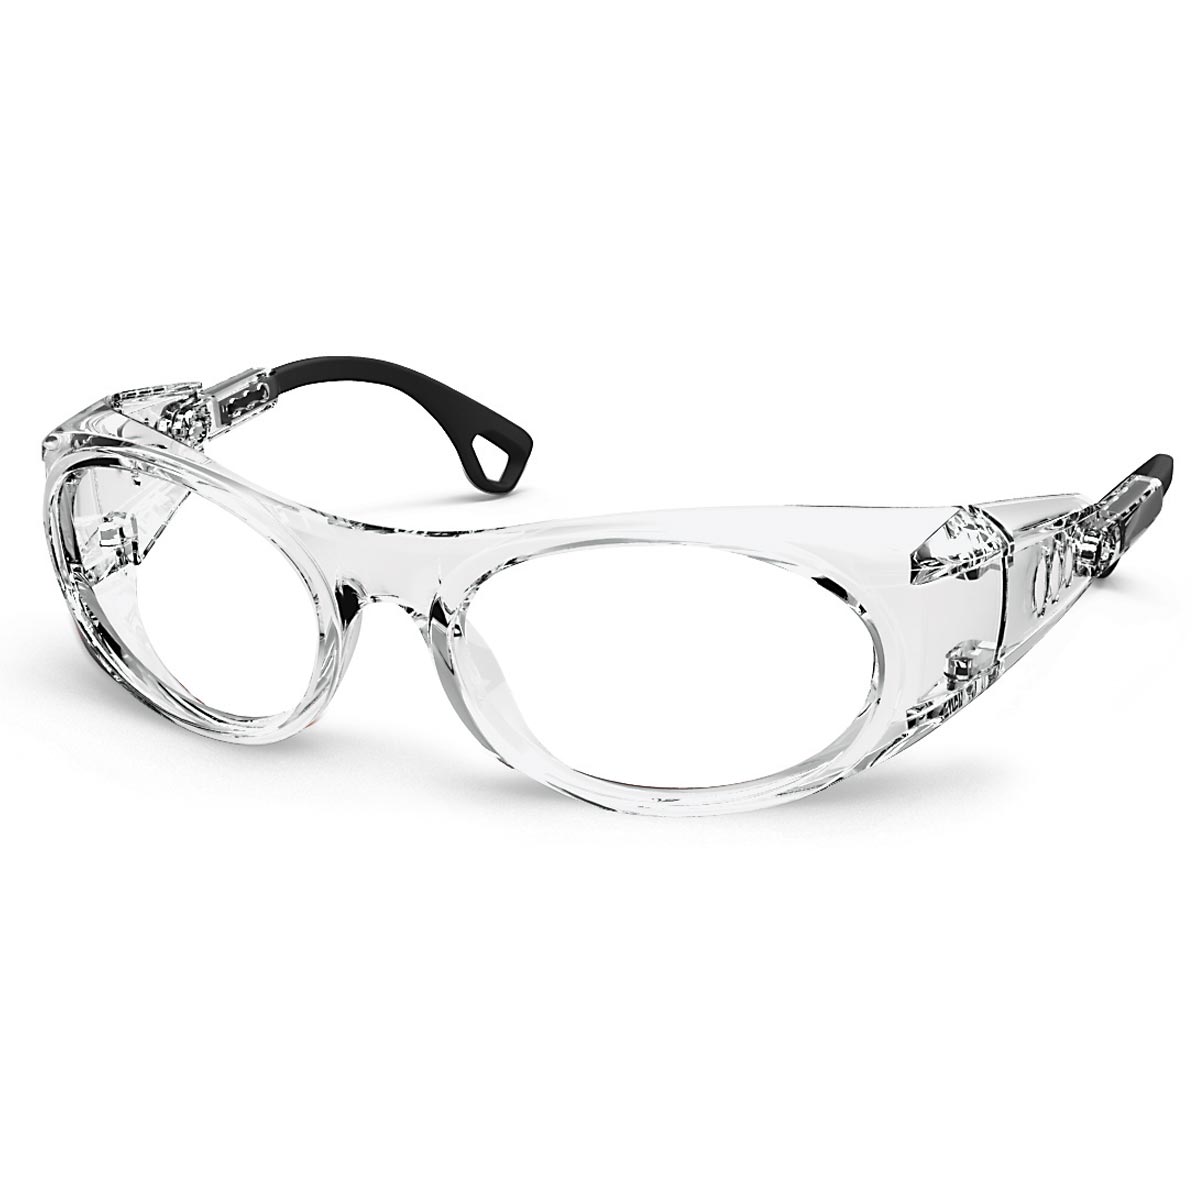 Uvex prescription safety glasses RX cd 5505 transparent